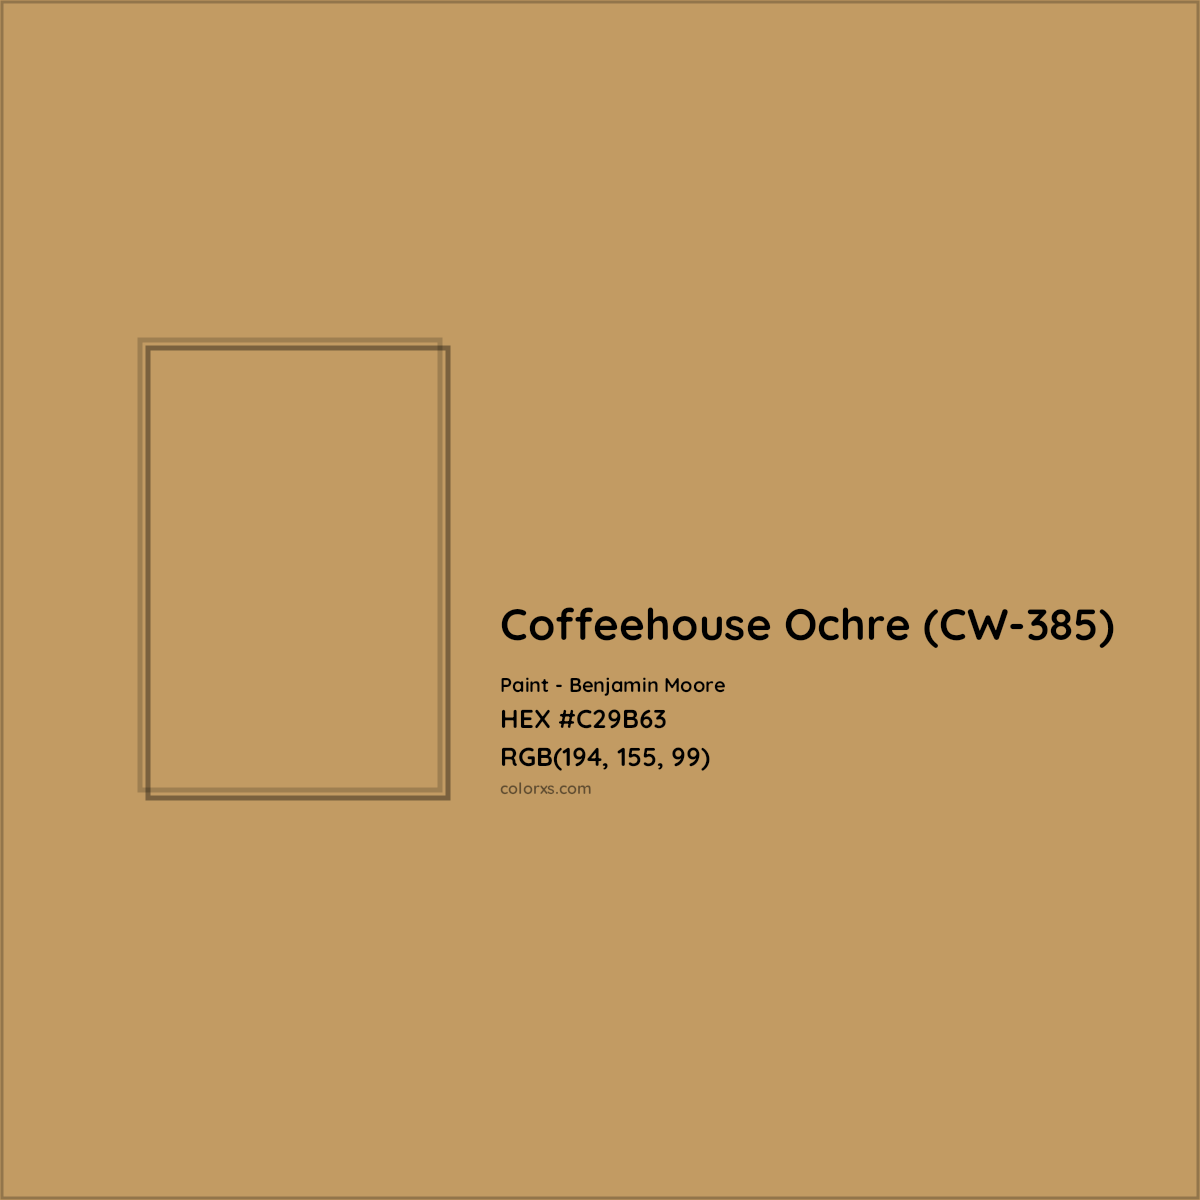 HEX #C29B63 Coffeehouse Ochre (CW-385) Paint Benjamin Moore - Color Code